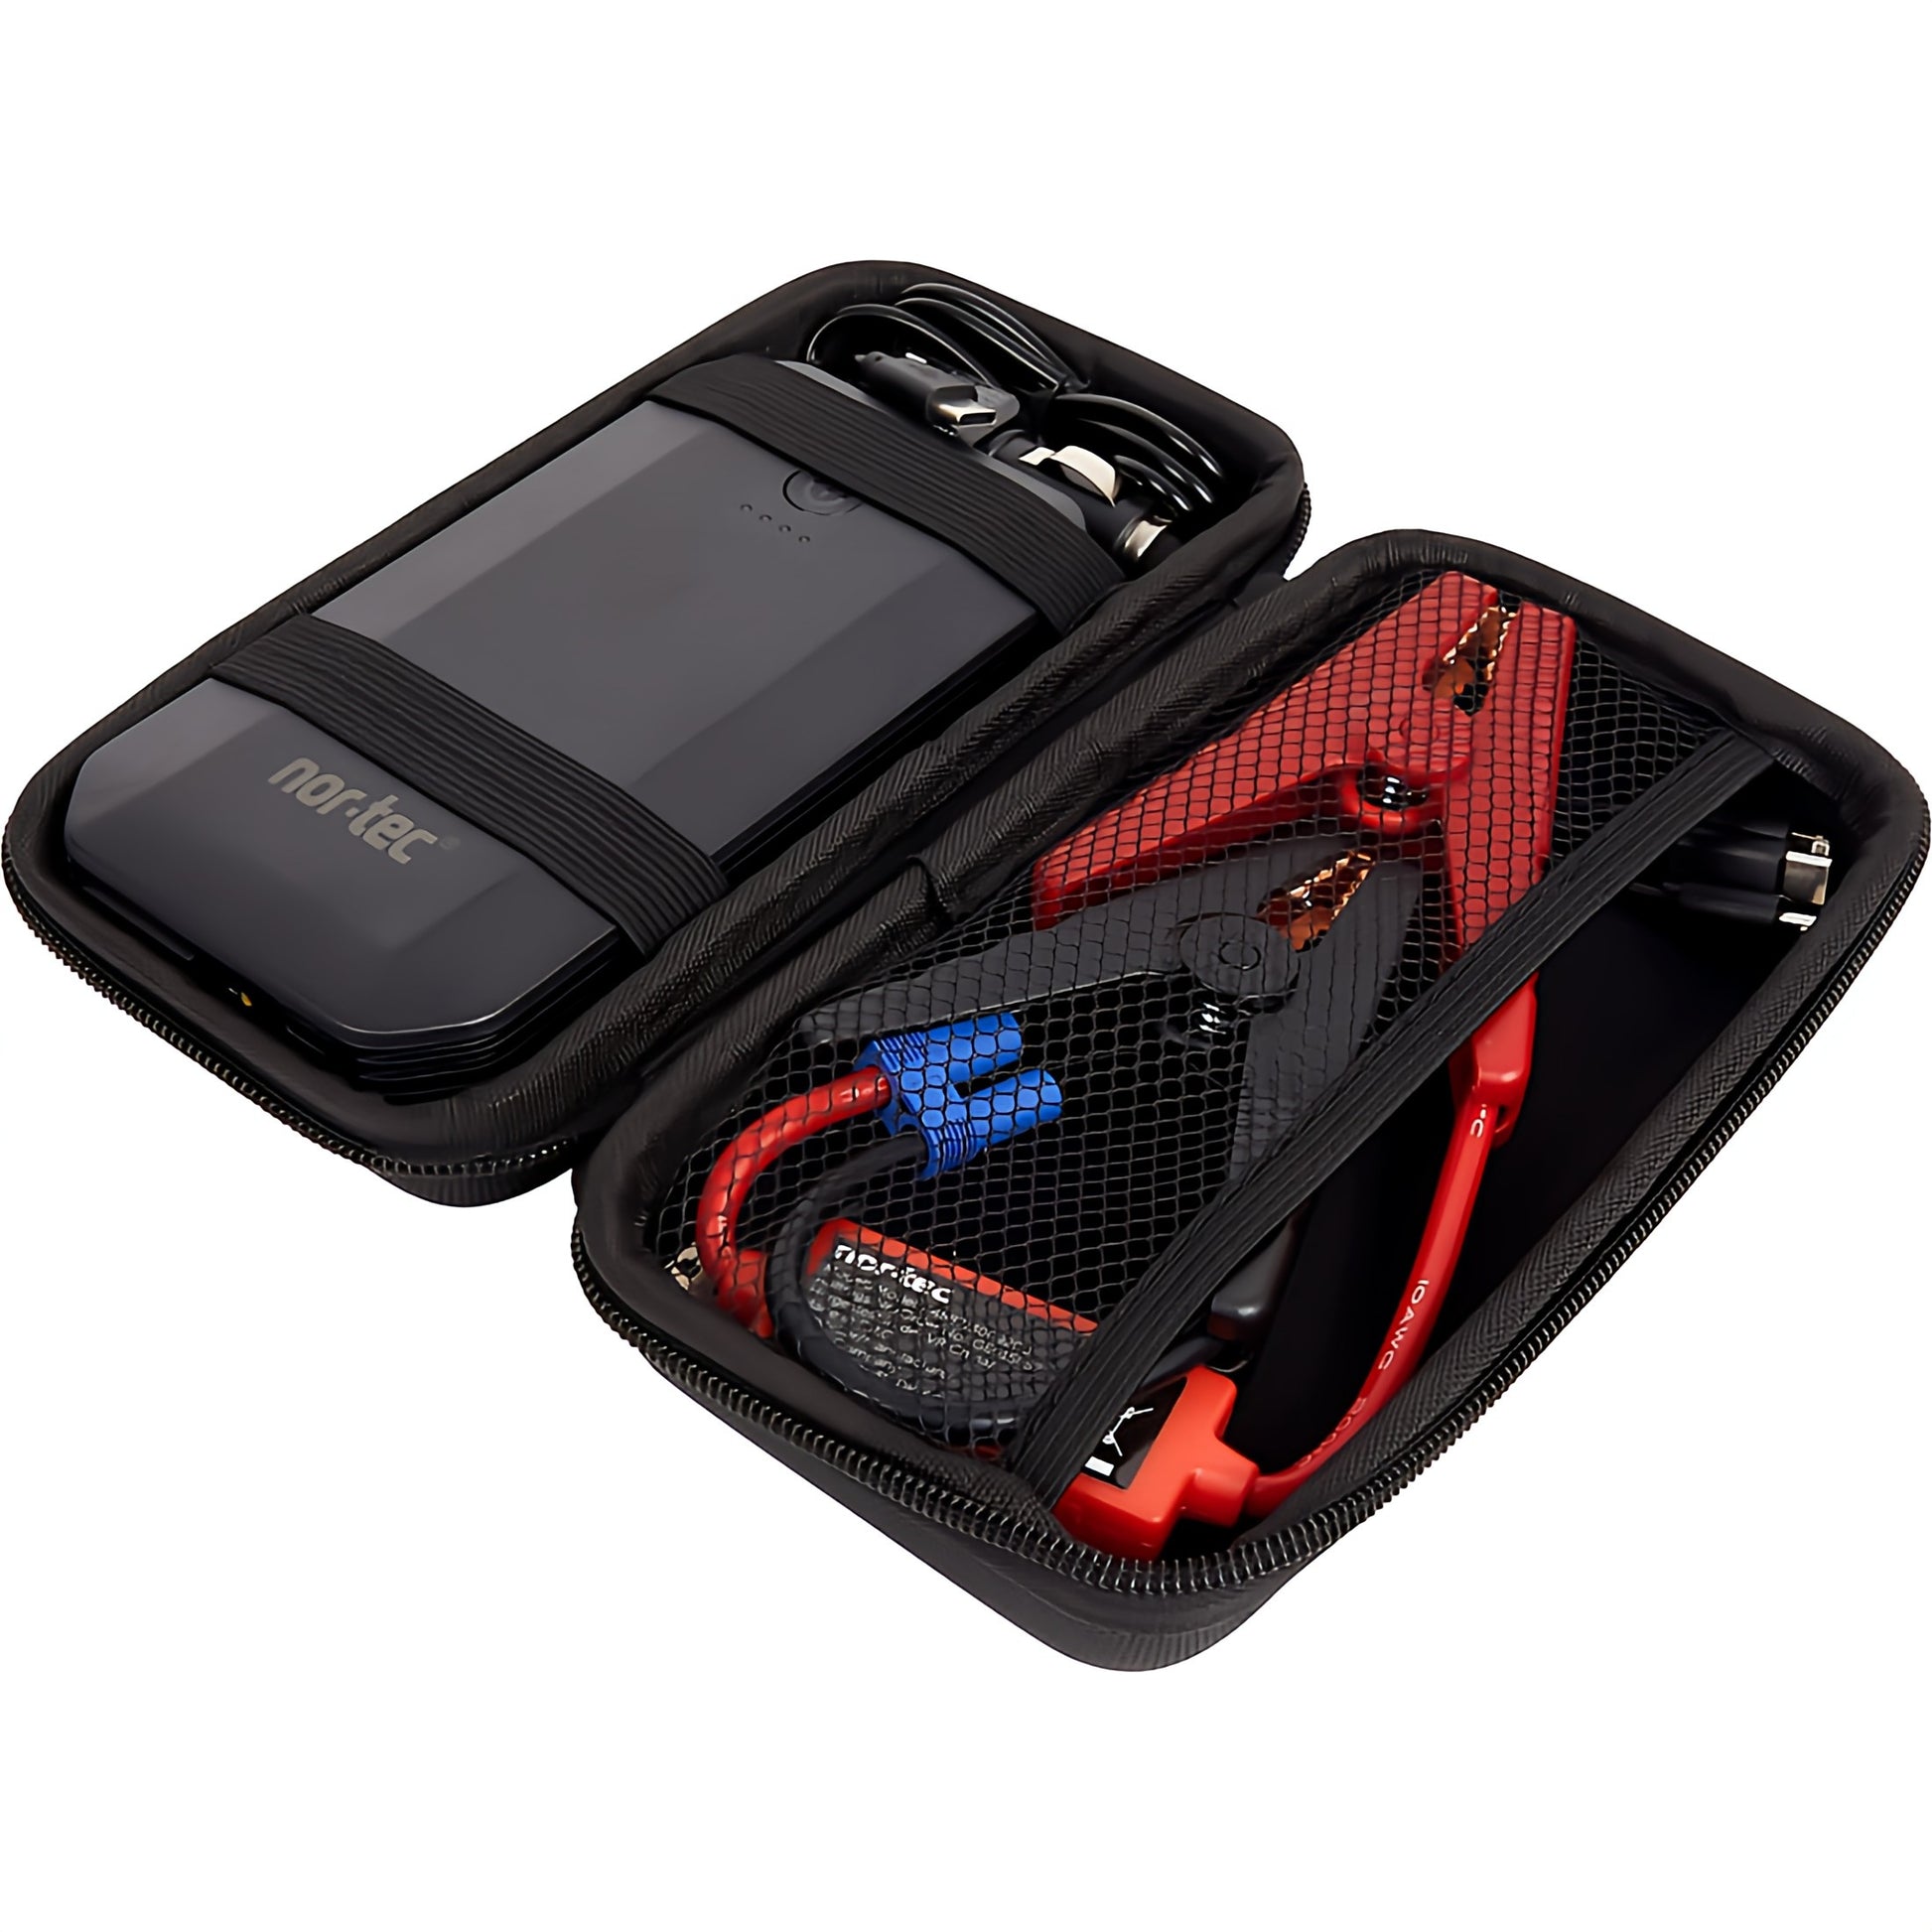 Starthilfe Set Powerbank 7200 mhA 12V Auto Batterie Booster Starter Powerbank mit Starthilfekabel und Tasche, SOS-Funktion USB-Anschluss mit Krokodilklemme